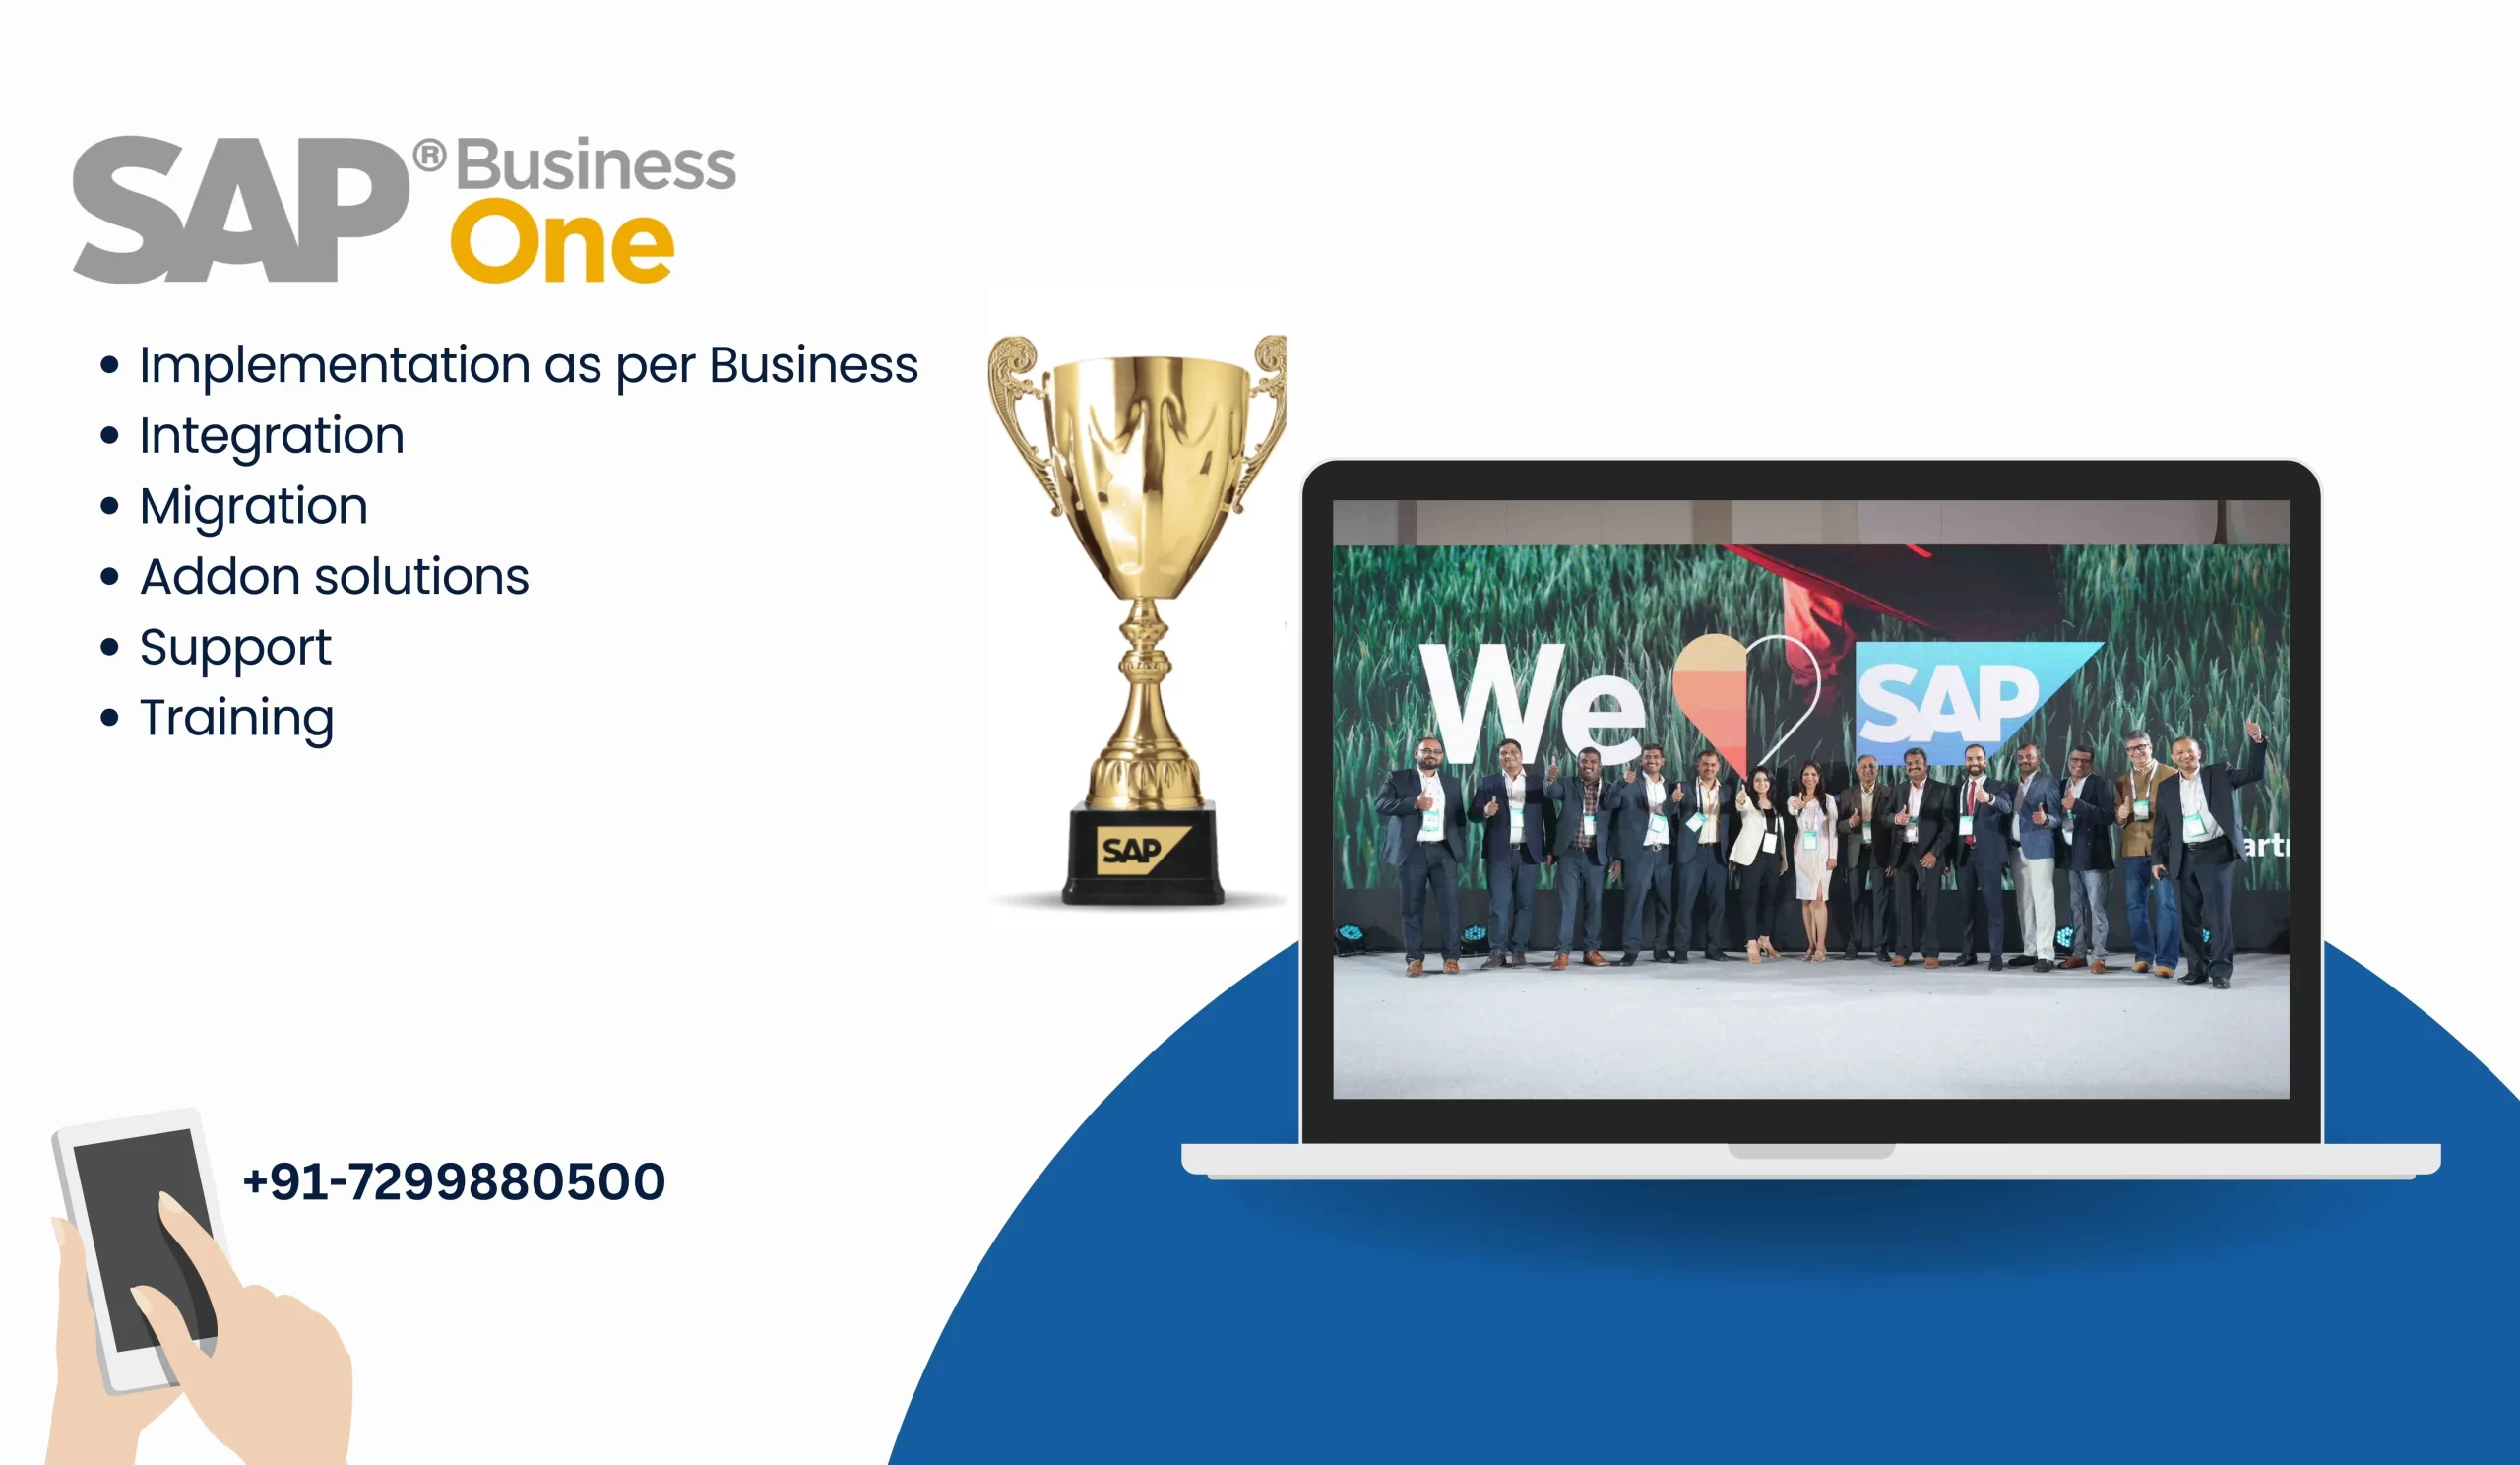 SAP Business One Partner in Goa (Panaji) - Zyple Software